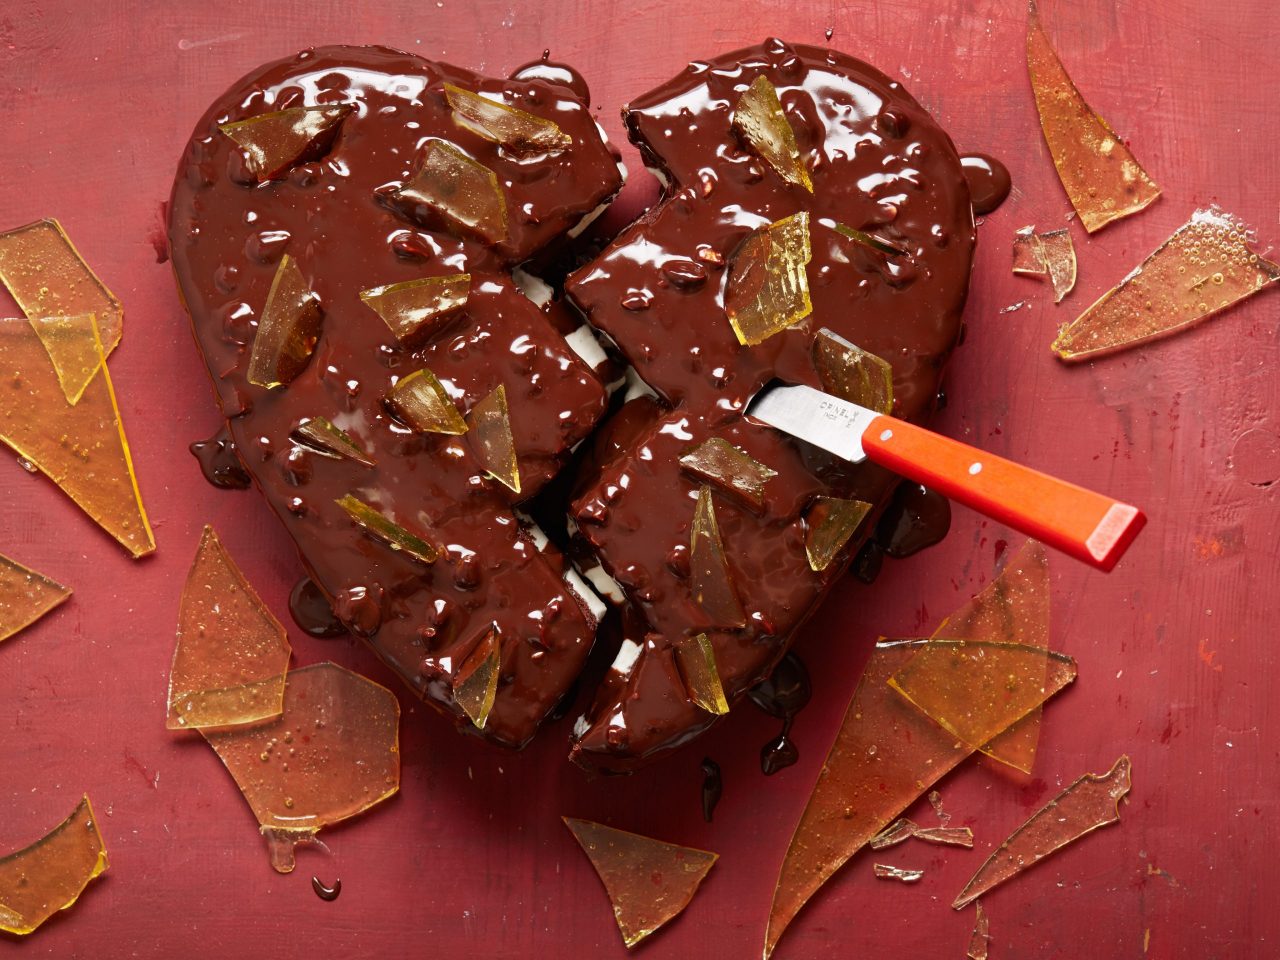 Broken Heart Chocolate Cake for Valentine's Day